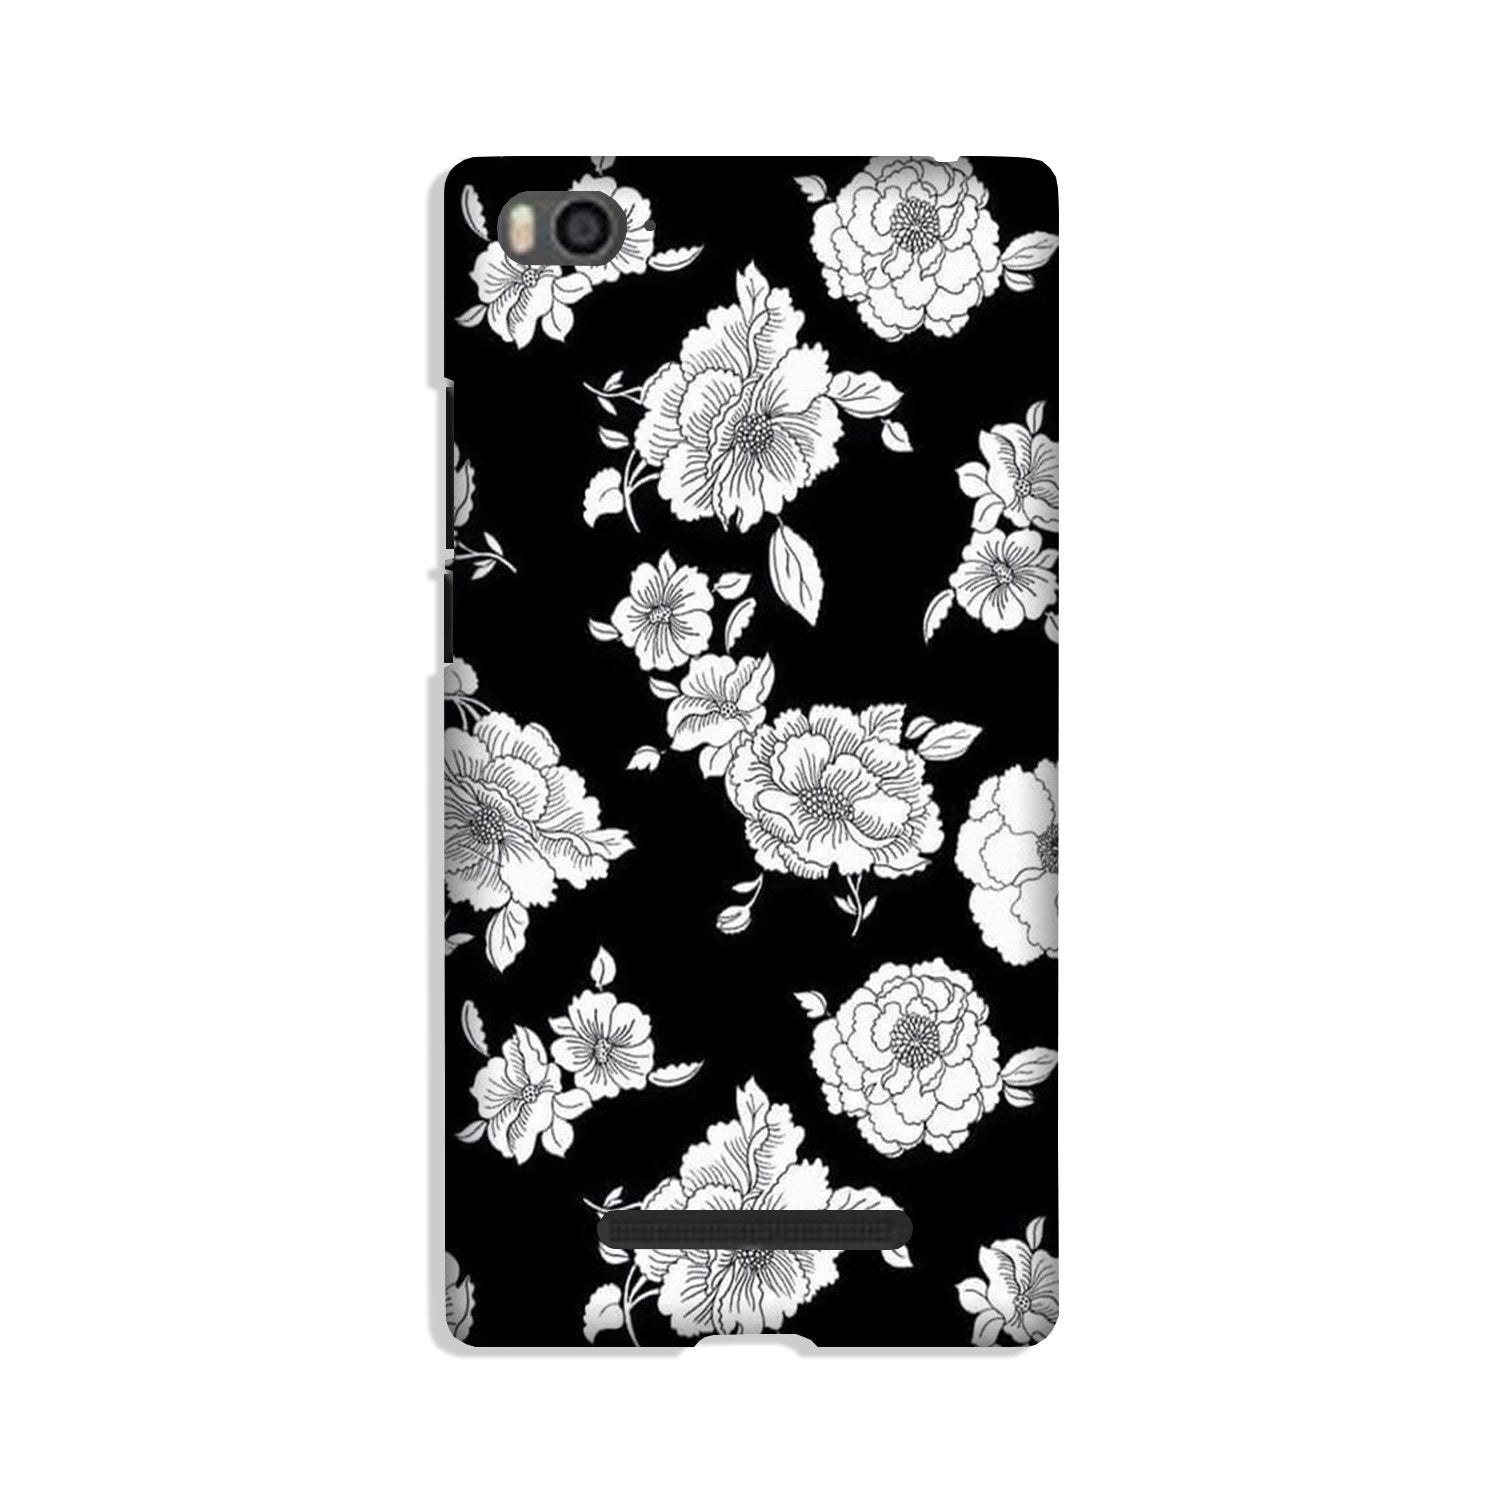 White flowers Black Background Case for Xiaomi Mi 4i